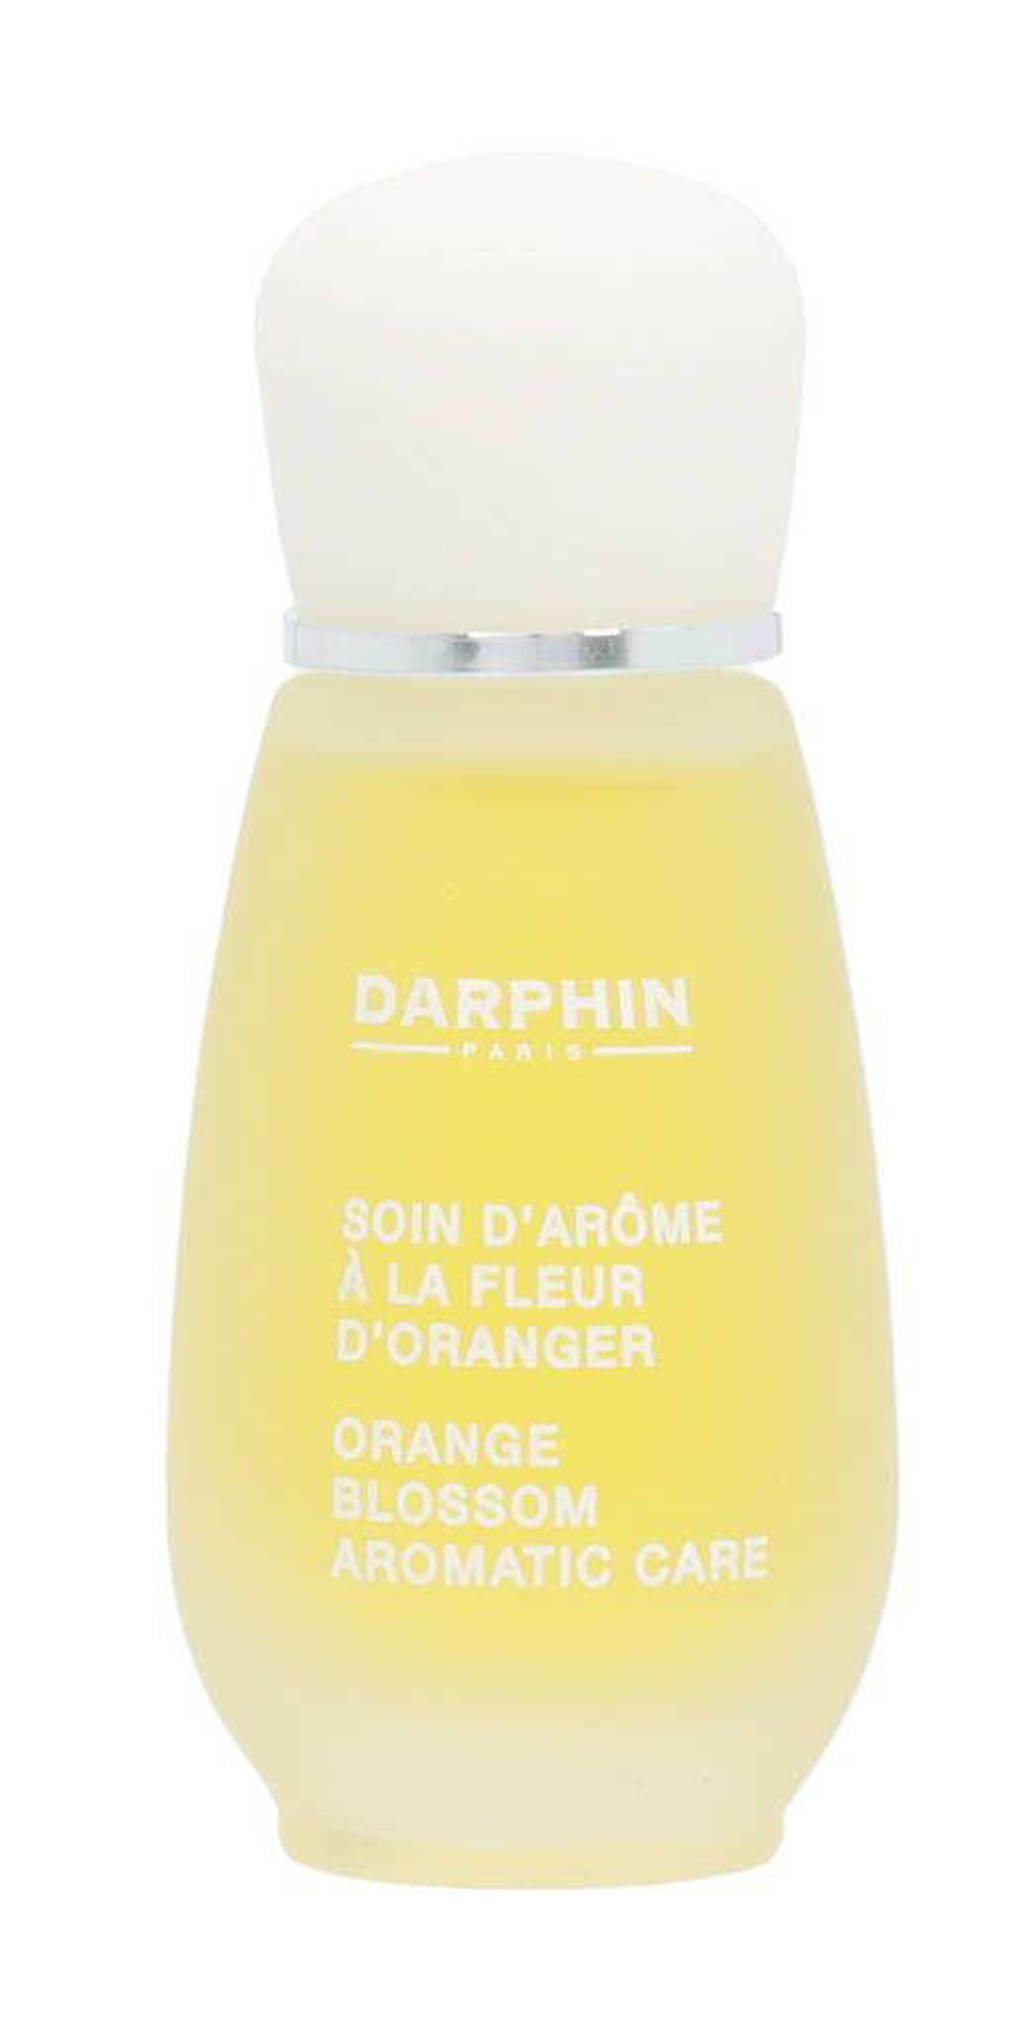 Darphin Orange Blossom Aromatic Care serum